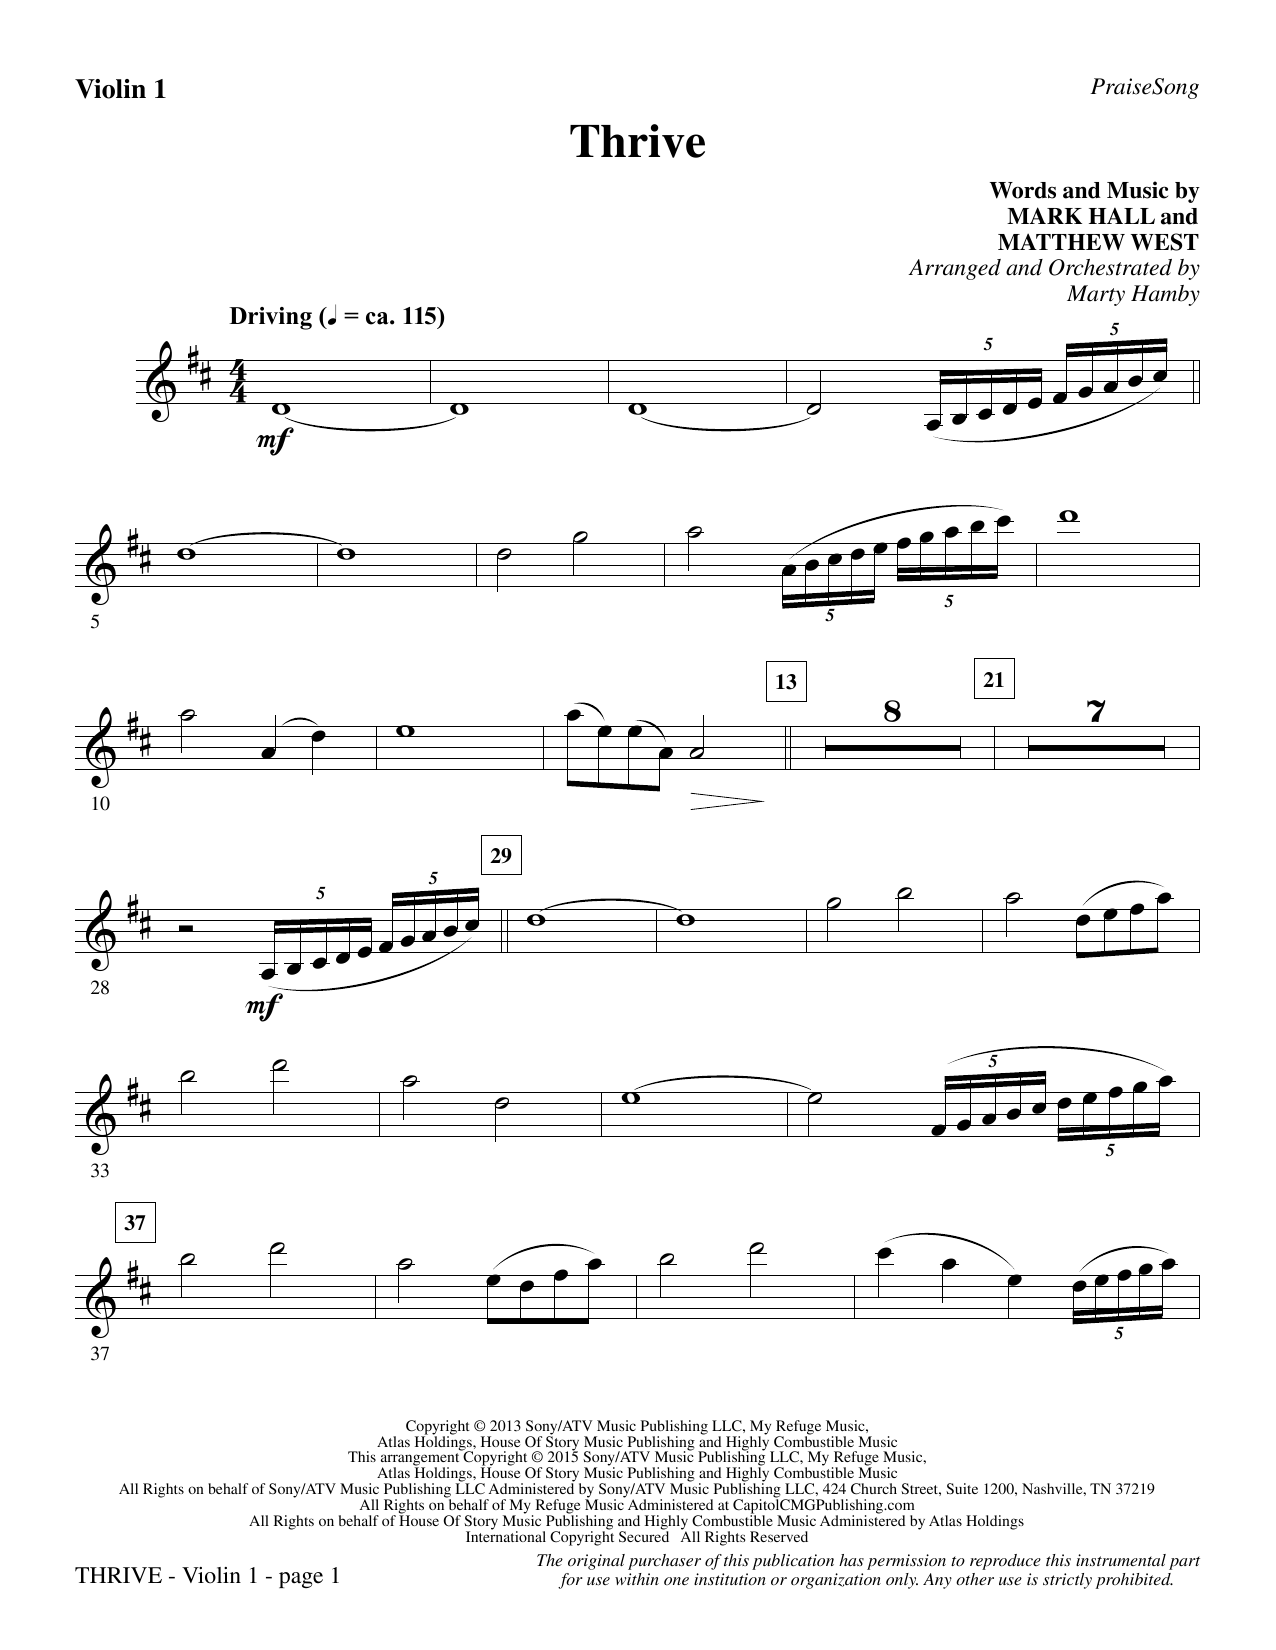 Marty Hamby Thrive - Violin 1 sheet music notes and chords. Download Printable PDF.